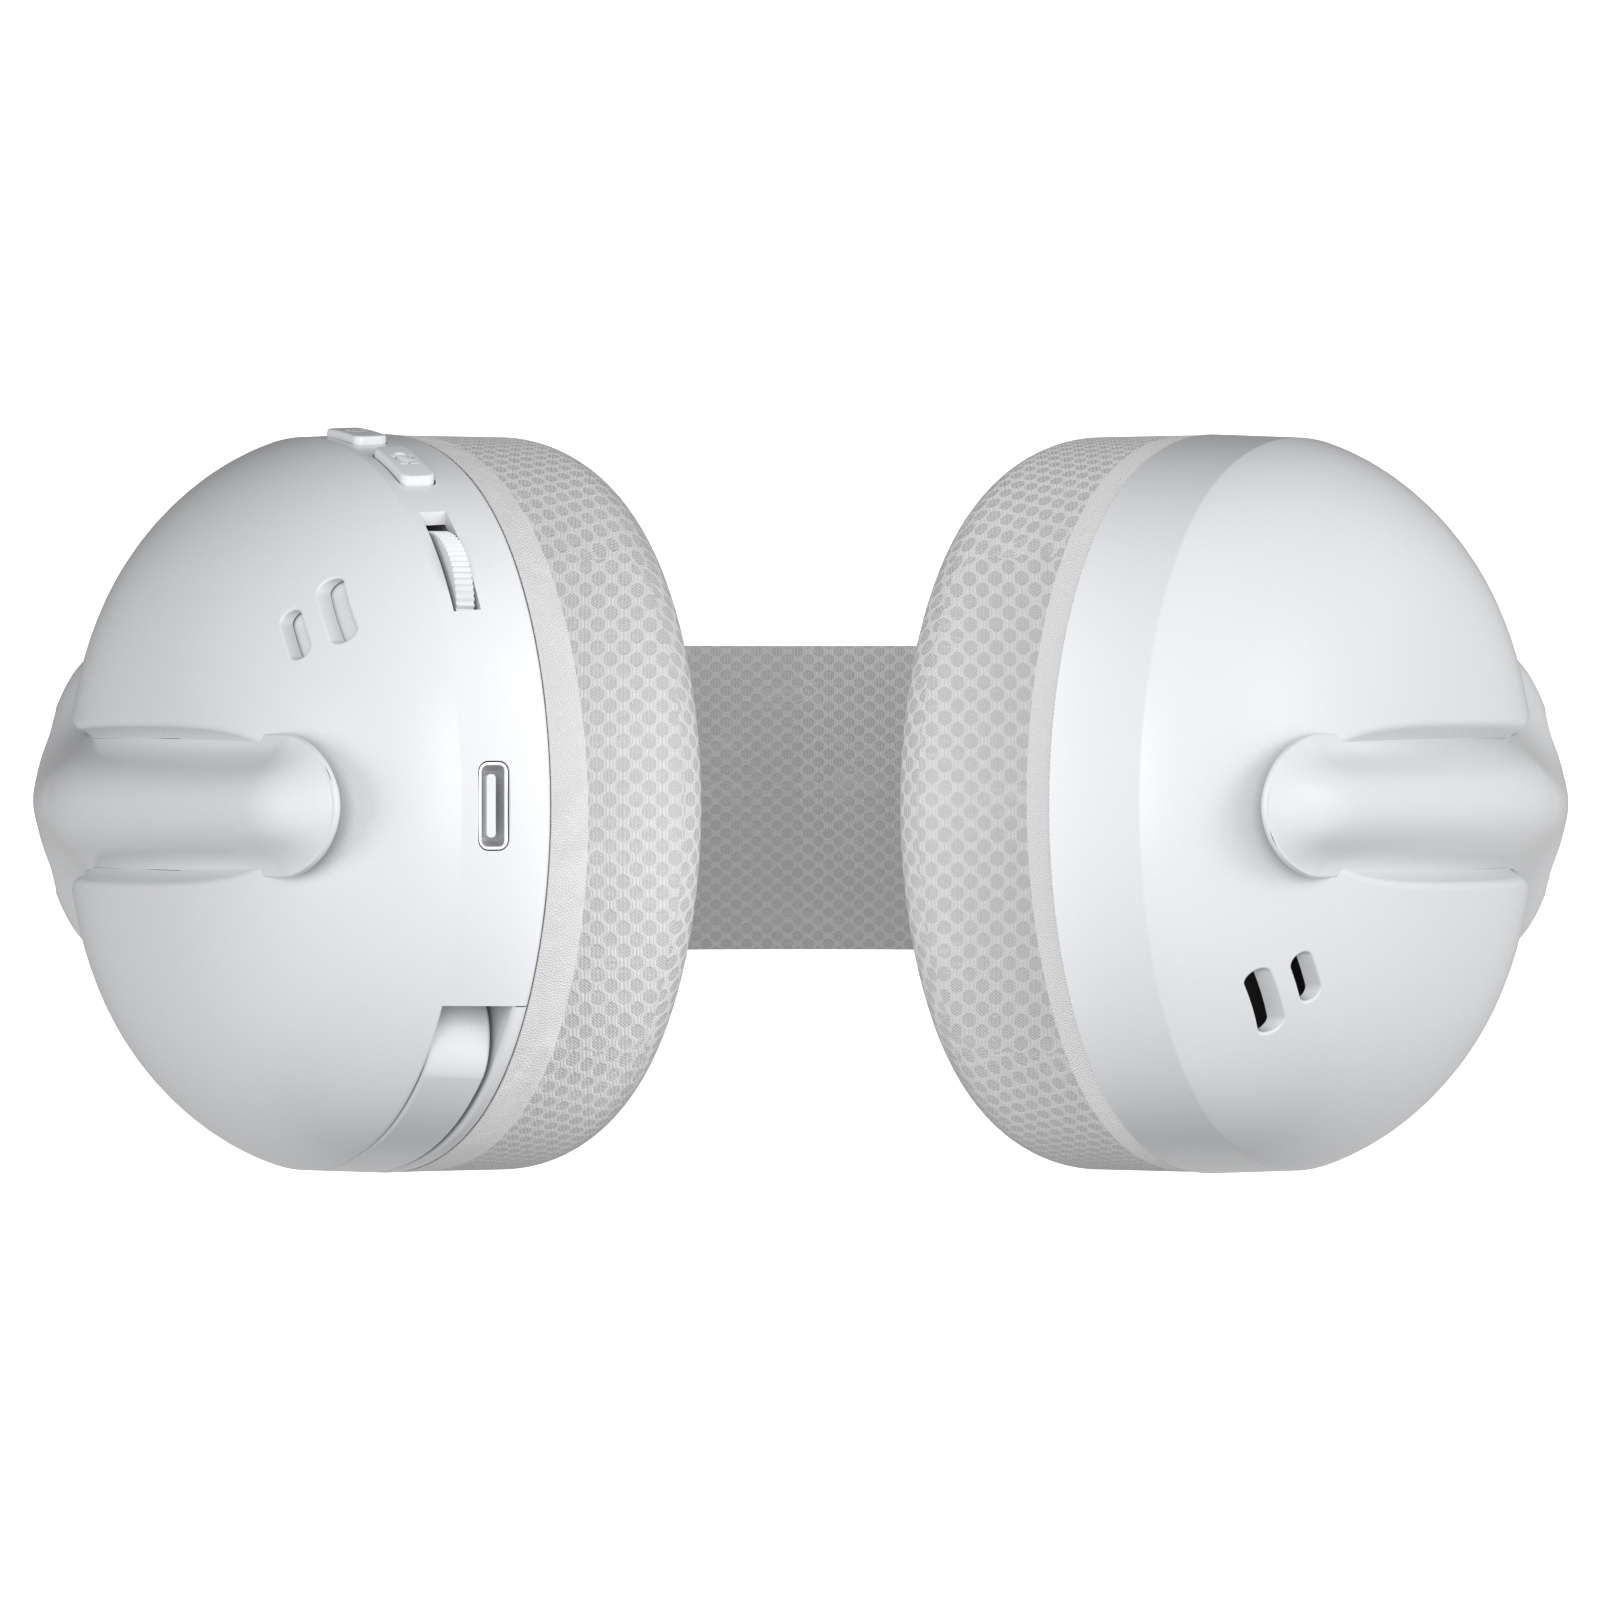 Наушники Aula S6 - 3 in 1 Wired/2.4G Wireless/Bluetooth White (6948391235561) изображение 4